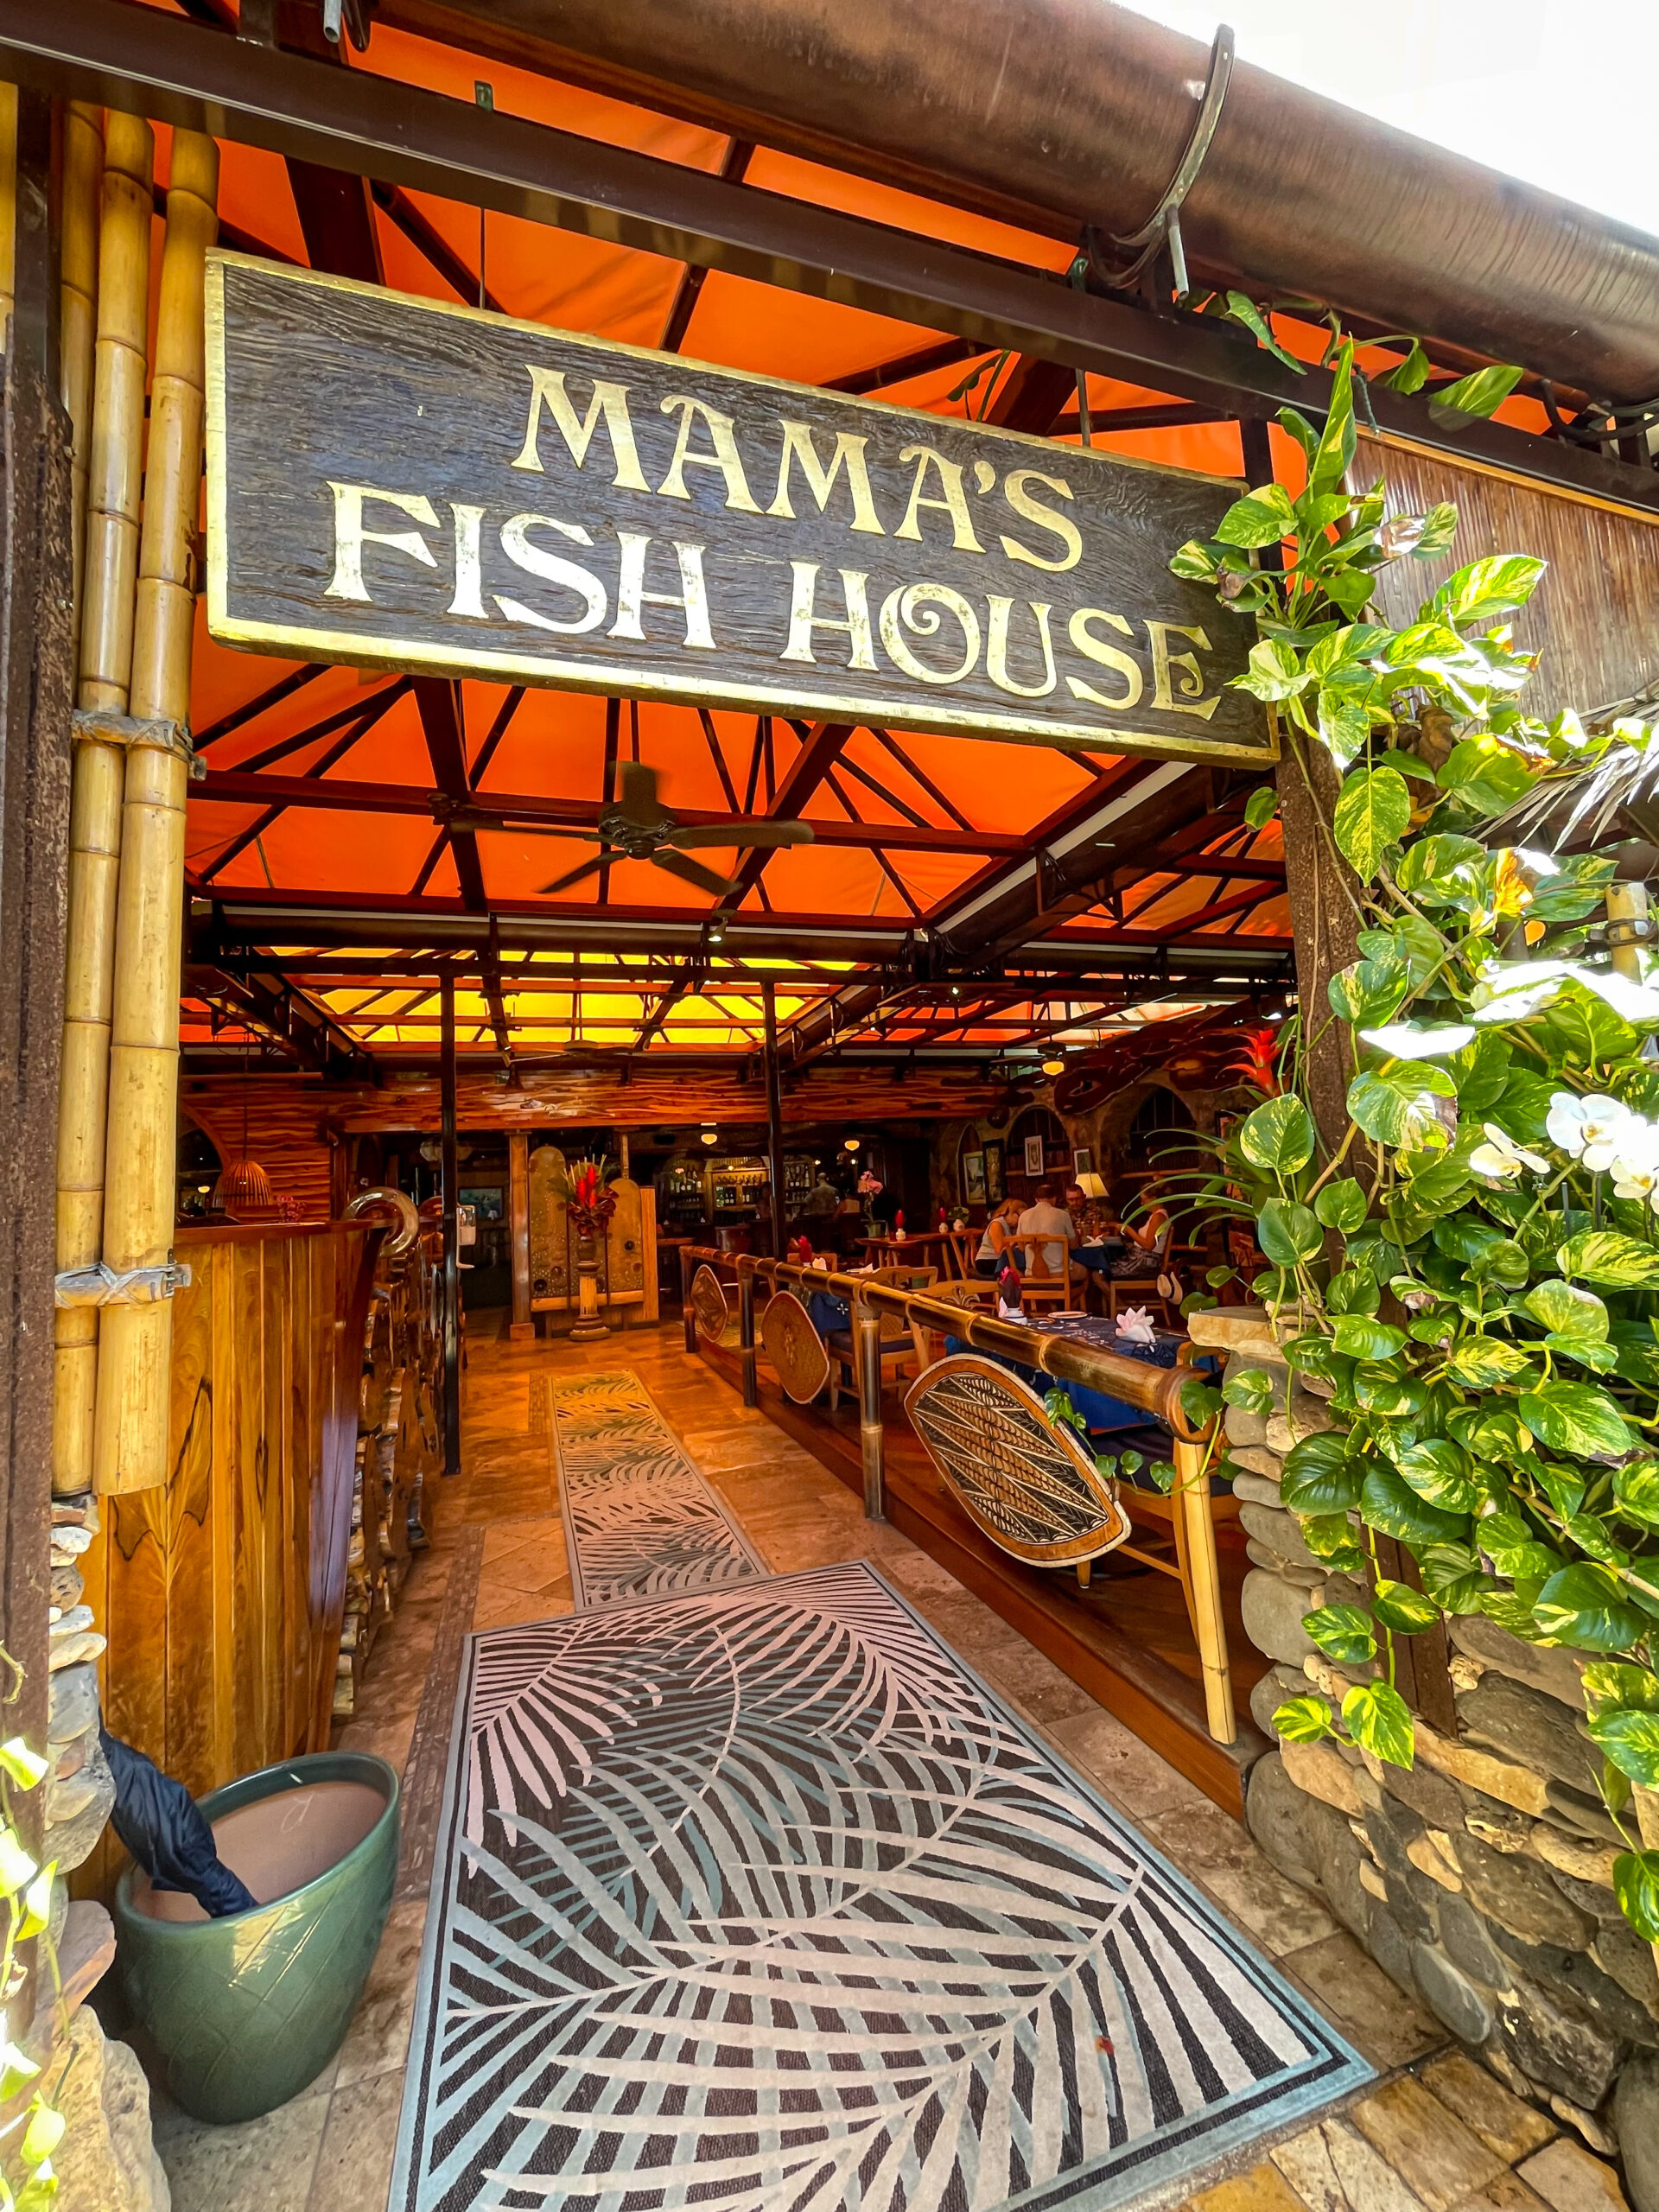 Entrance to Mama's Fish House Restaurant in Maui, Hawaii